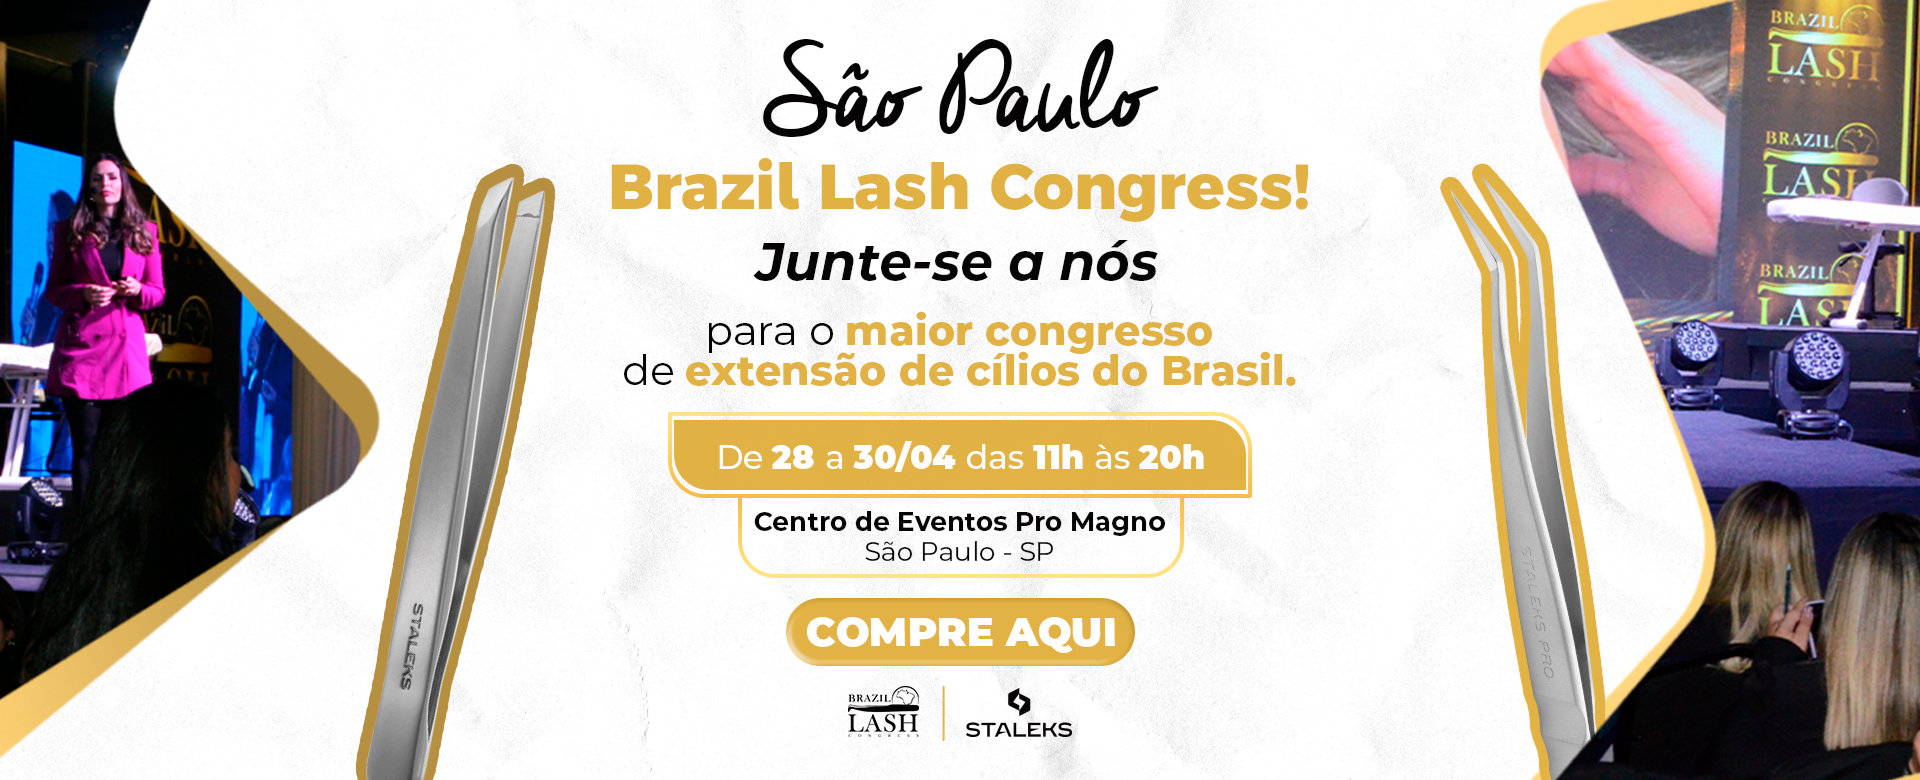 Brazil Lash Congress